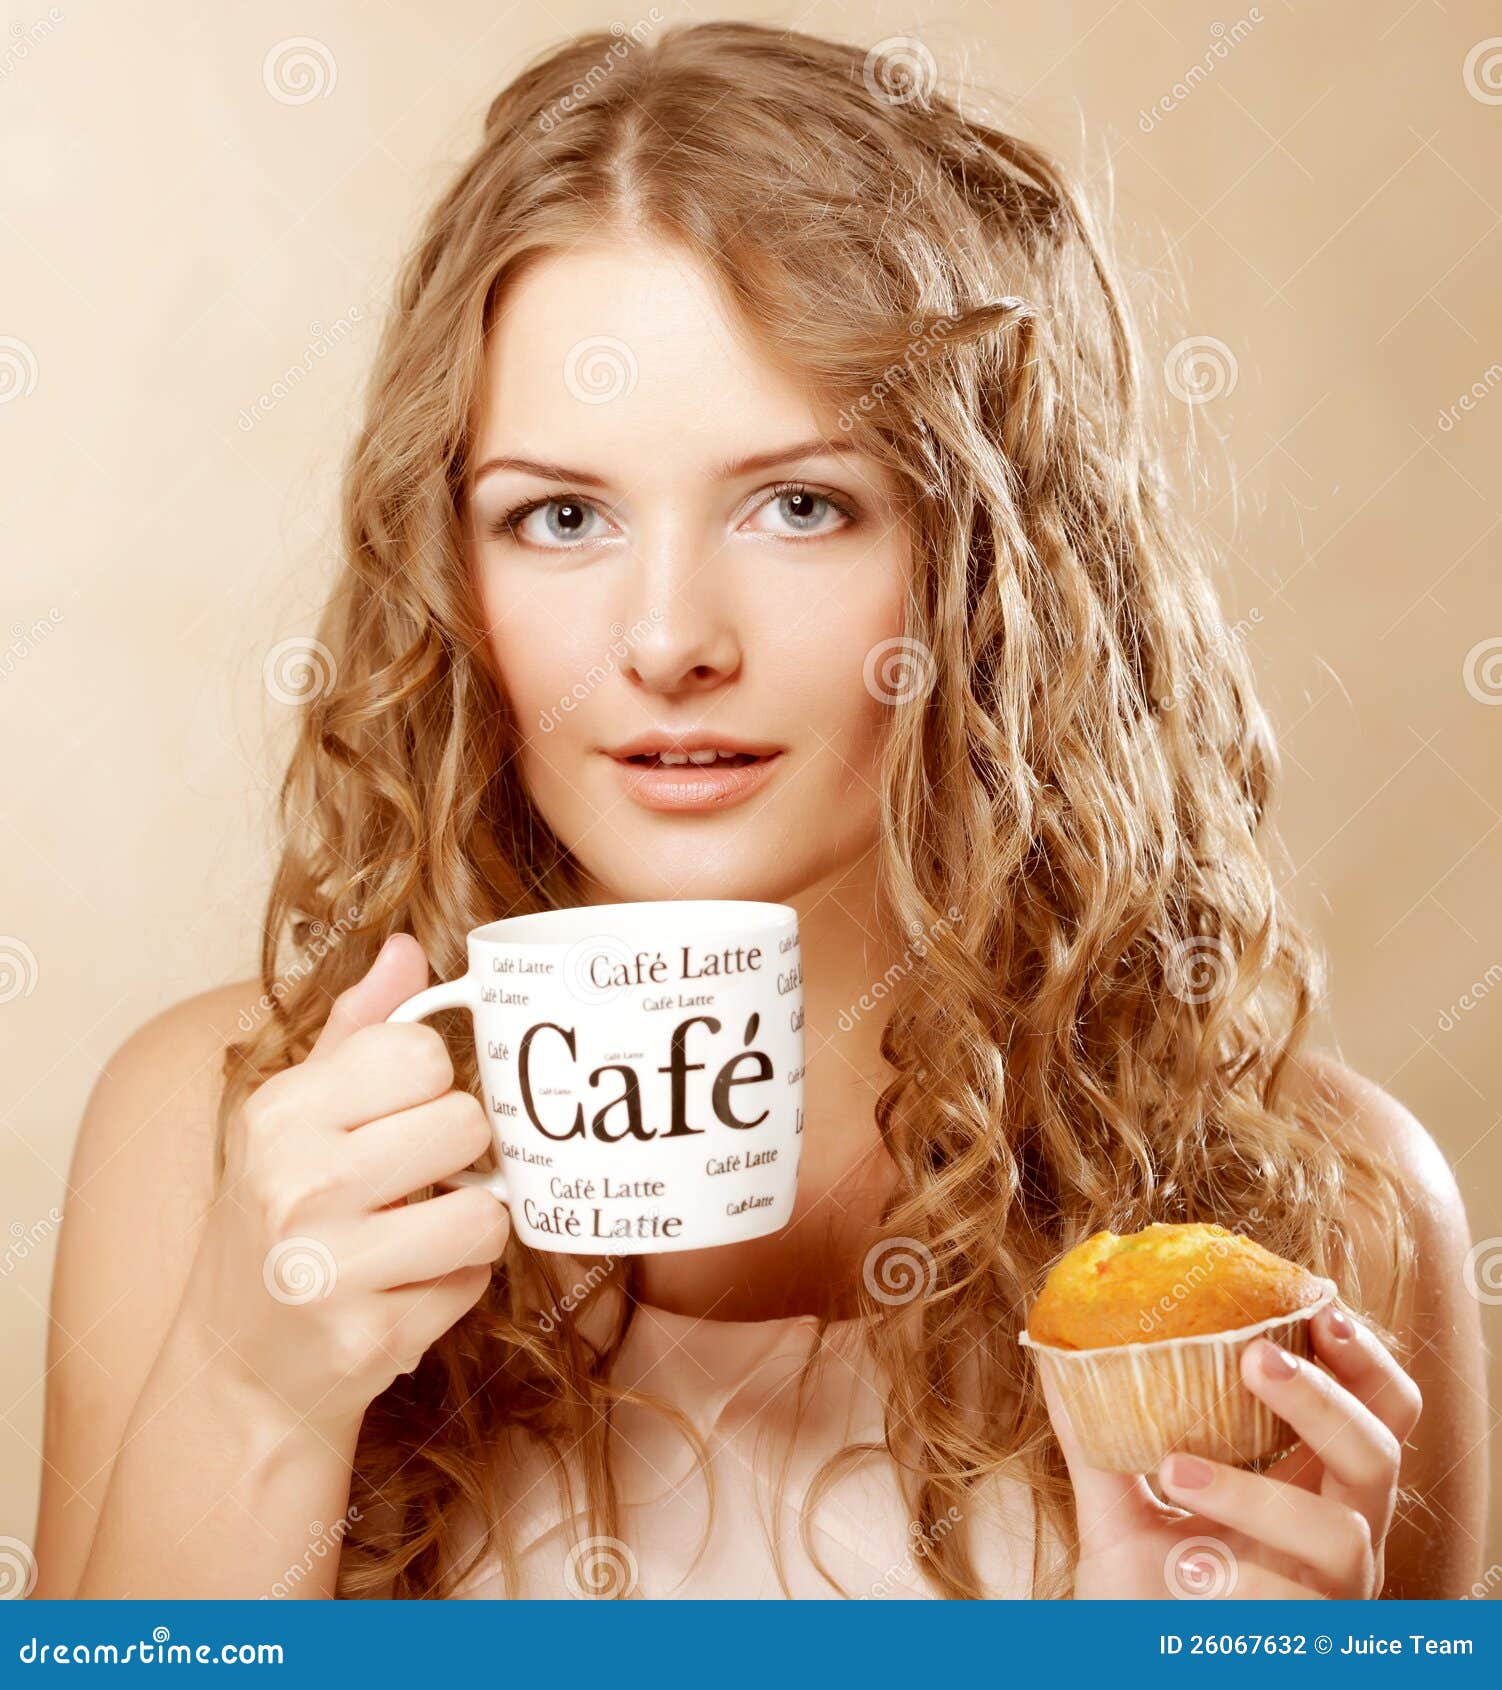 woman-coffee-cake-26067632.jpg